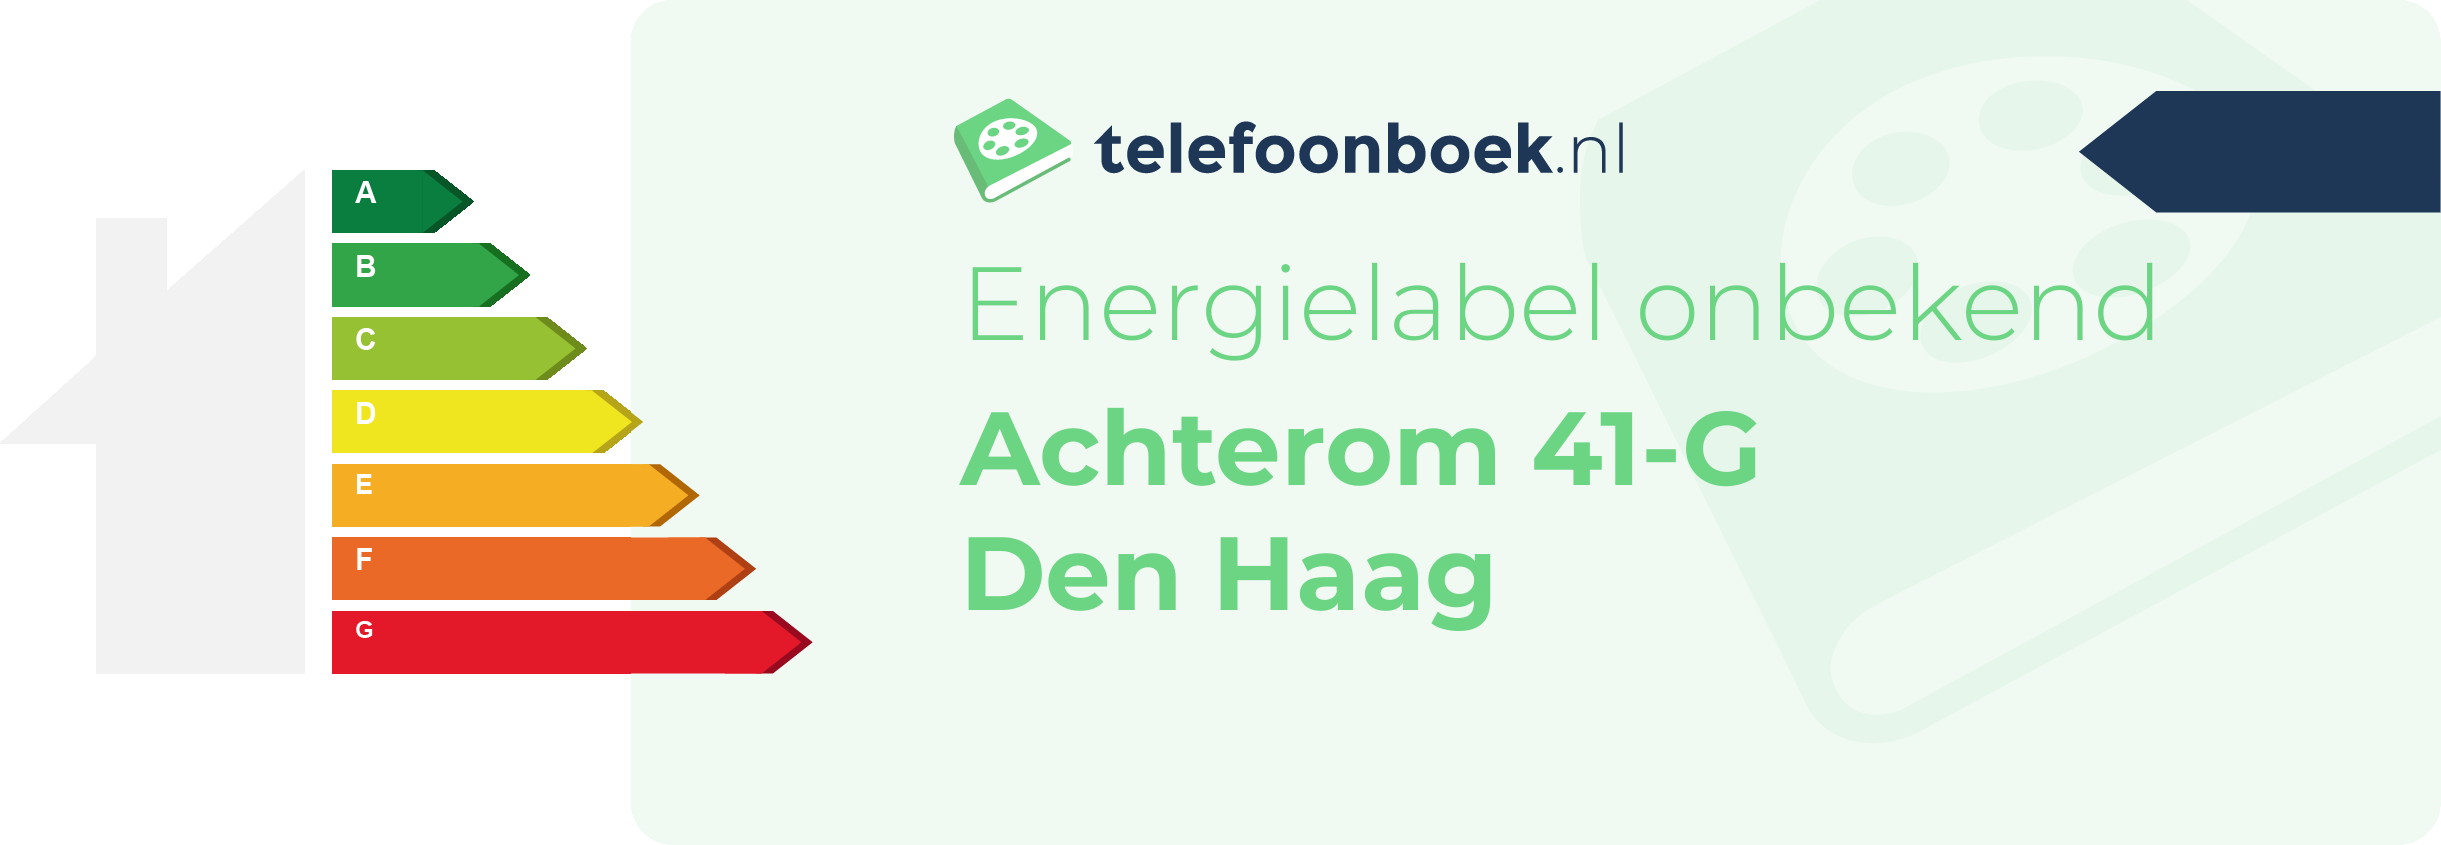 Energielabel Achterom 41-G Den Haag